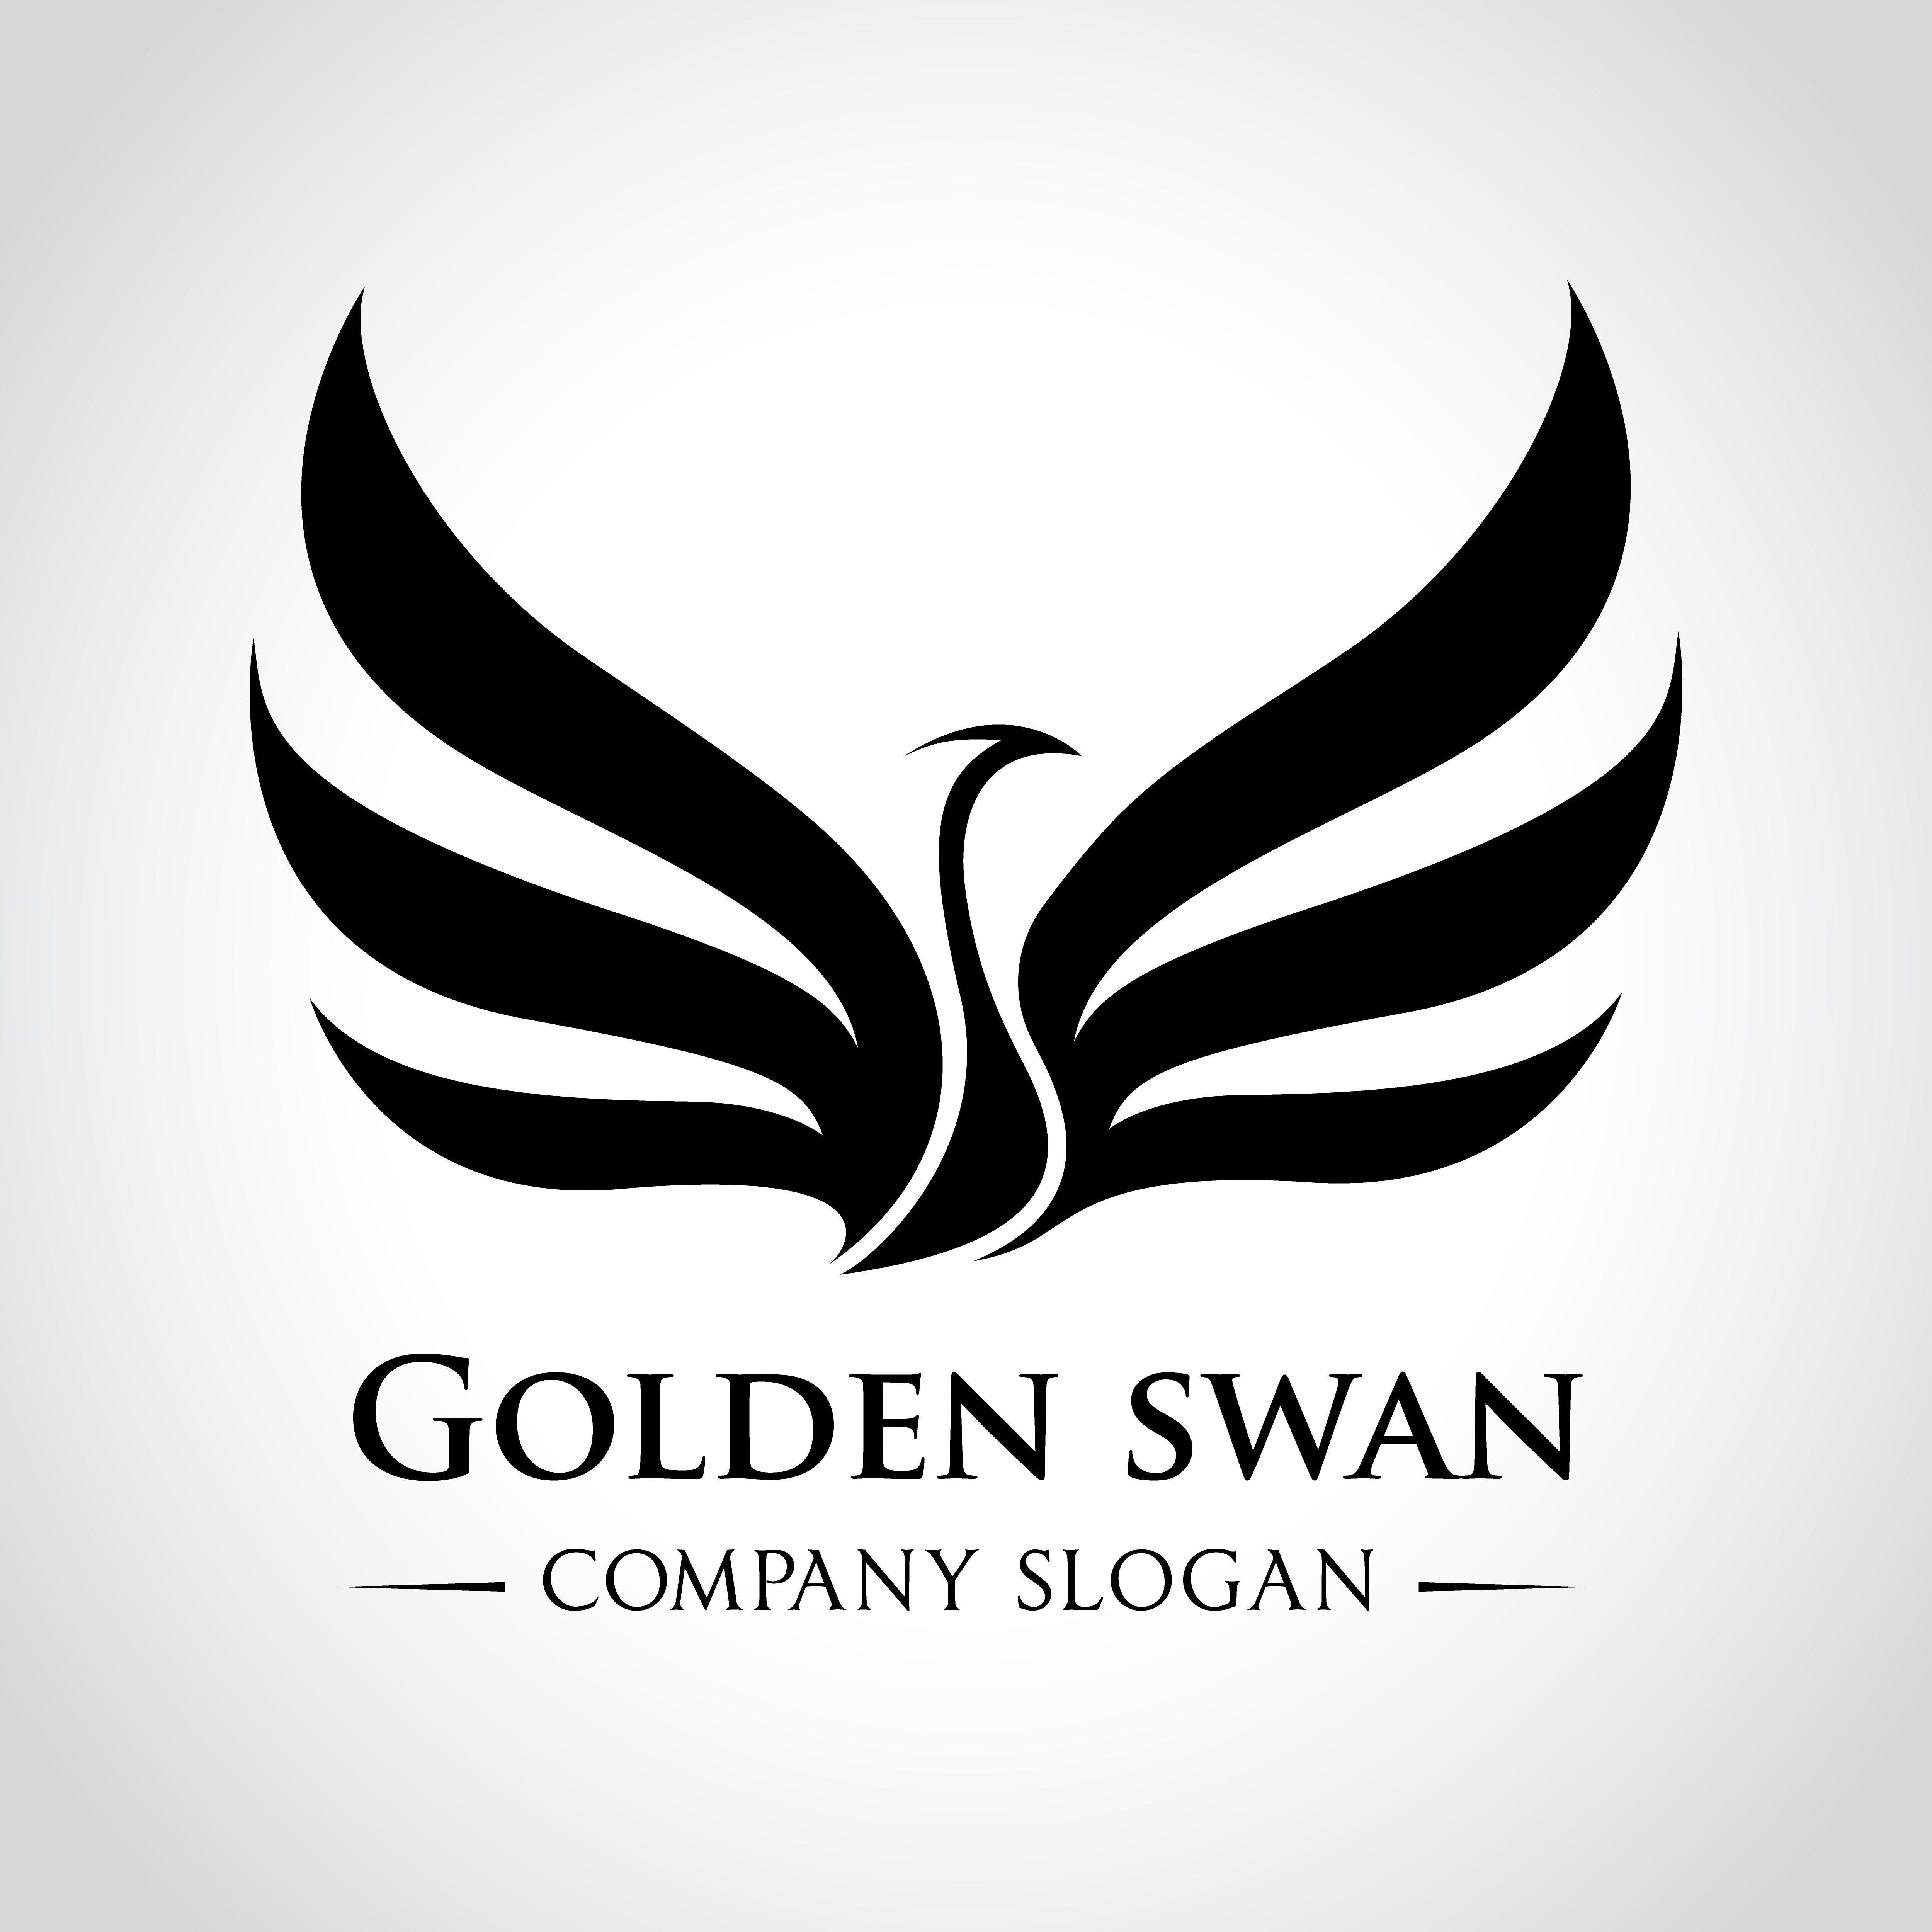 Gold Bird Company Logo - Definitive Guide to Designing a Logo